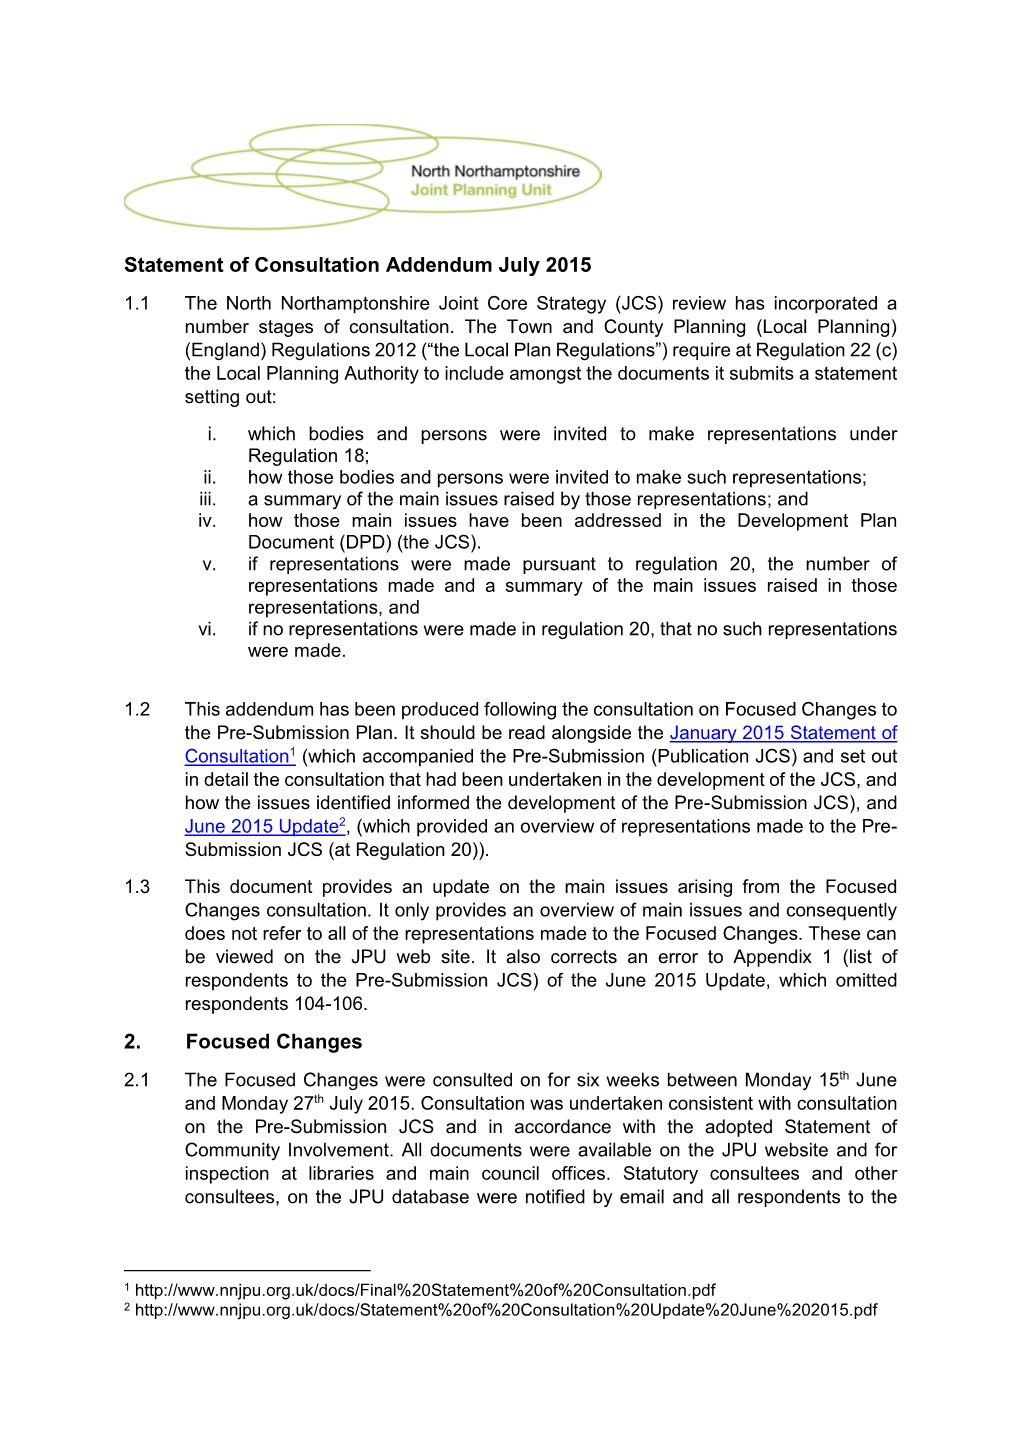 Statement of Consultation Addendum July 2015 2. Focused Changes